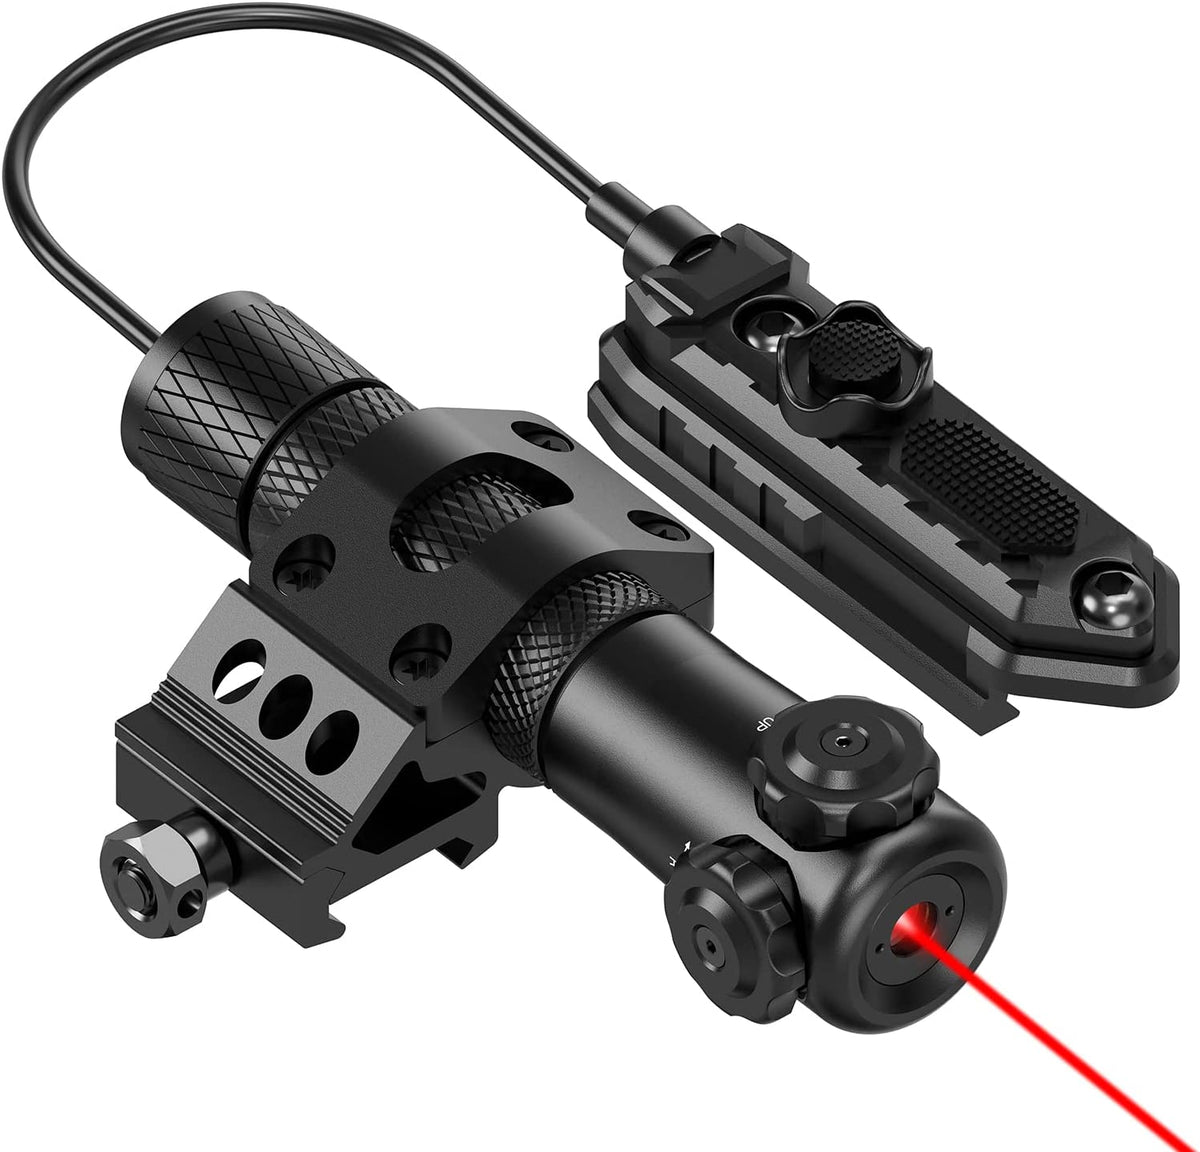 Mirino laser rosso Feyachi GL55 - Attacco Picatinny da 20 mm